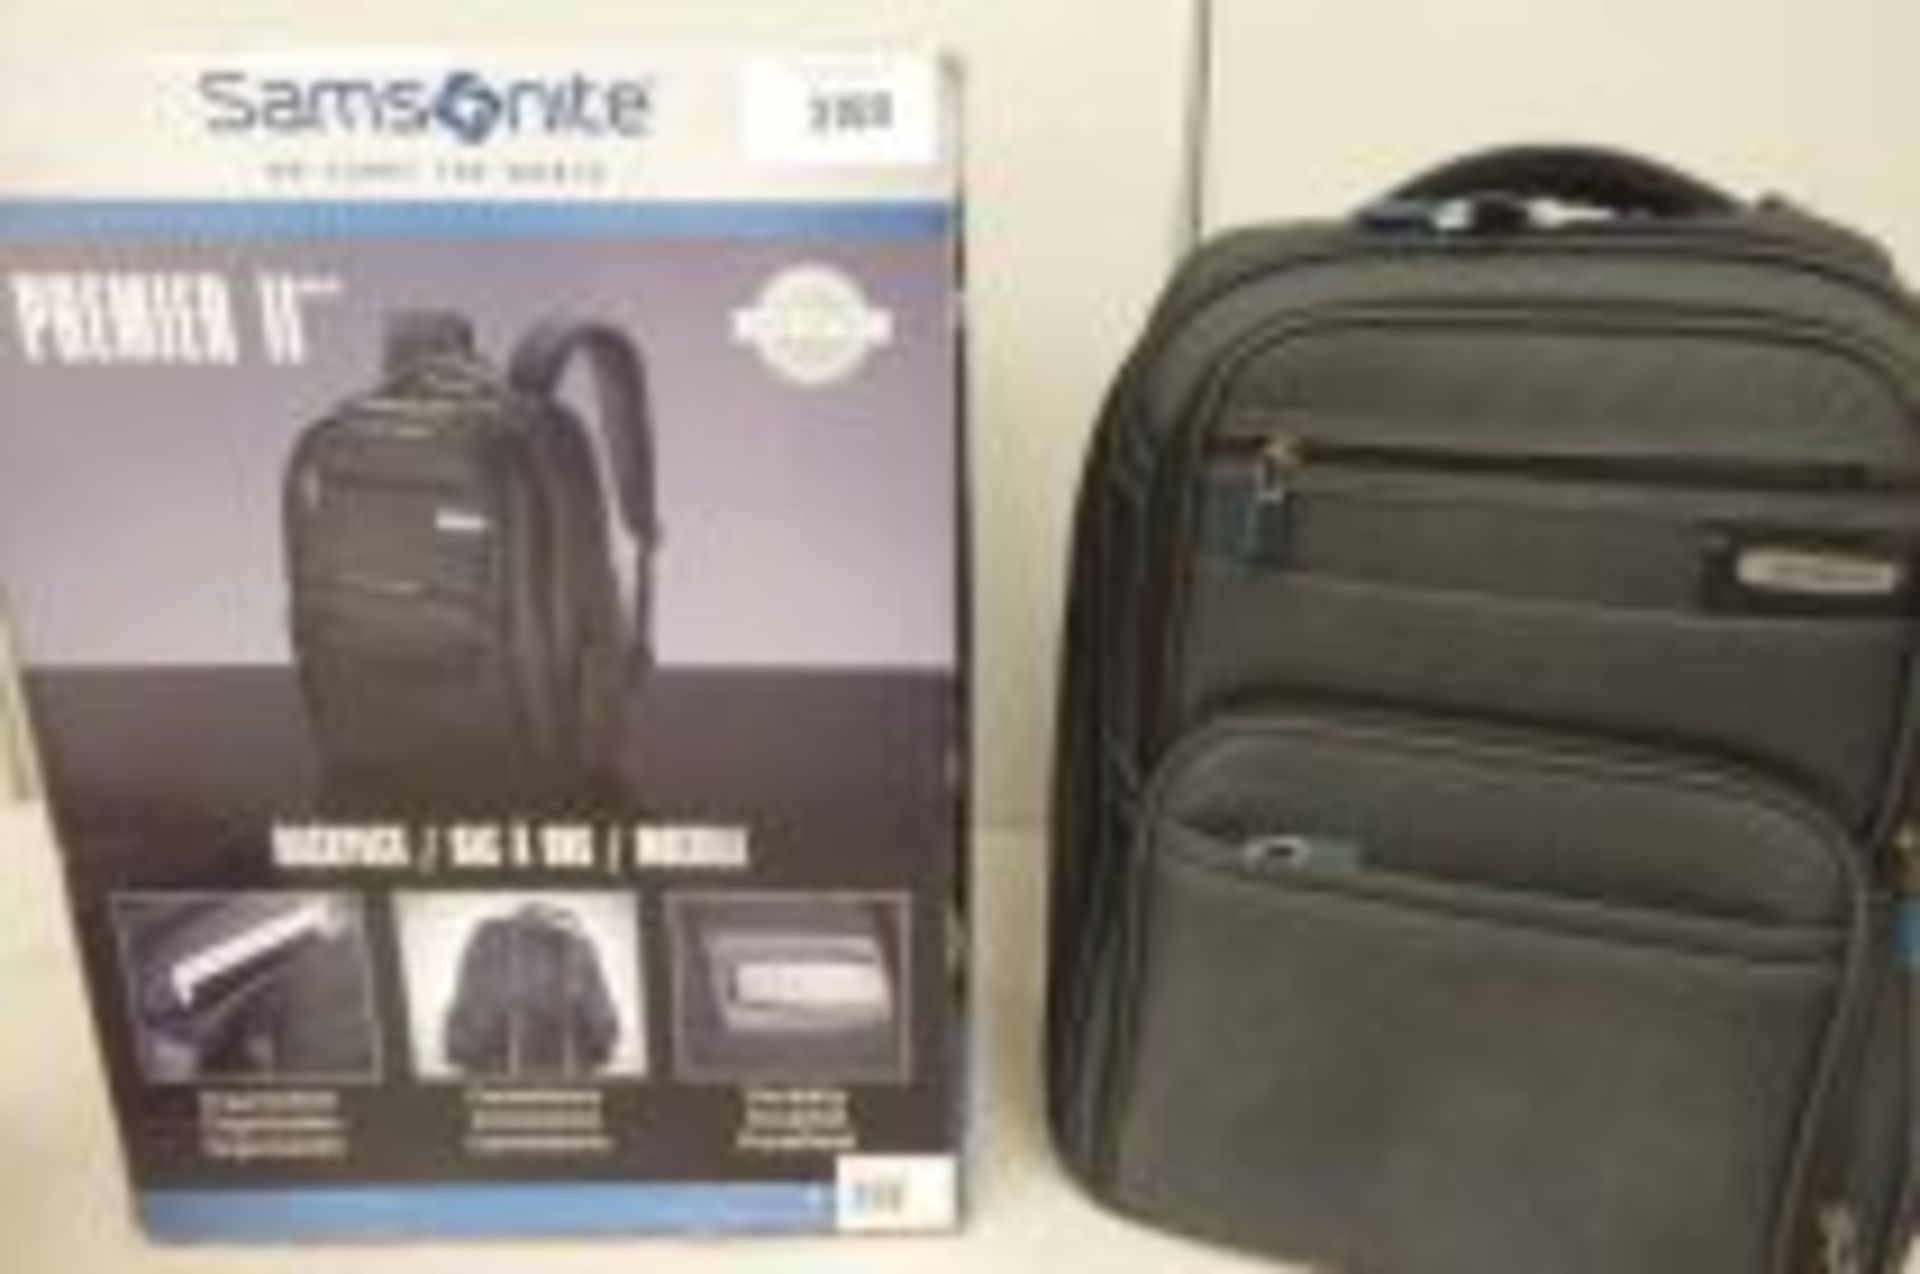 Boxed Samsonite backpack